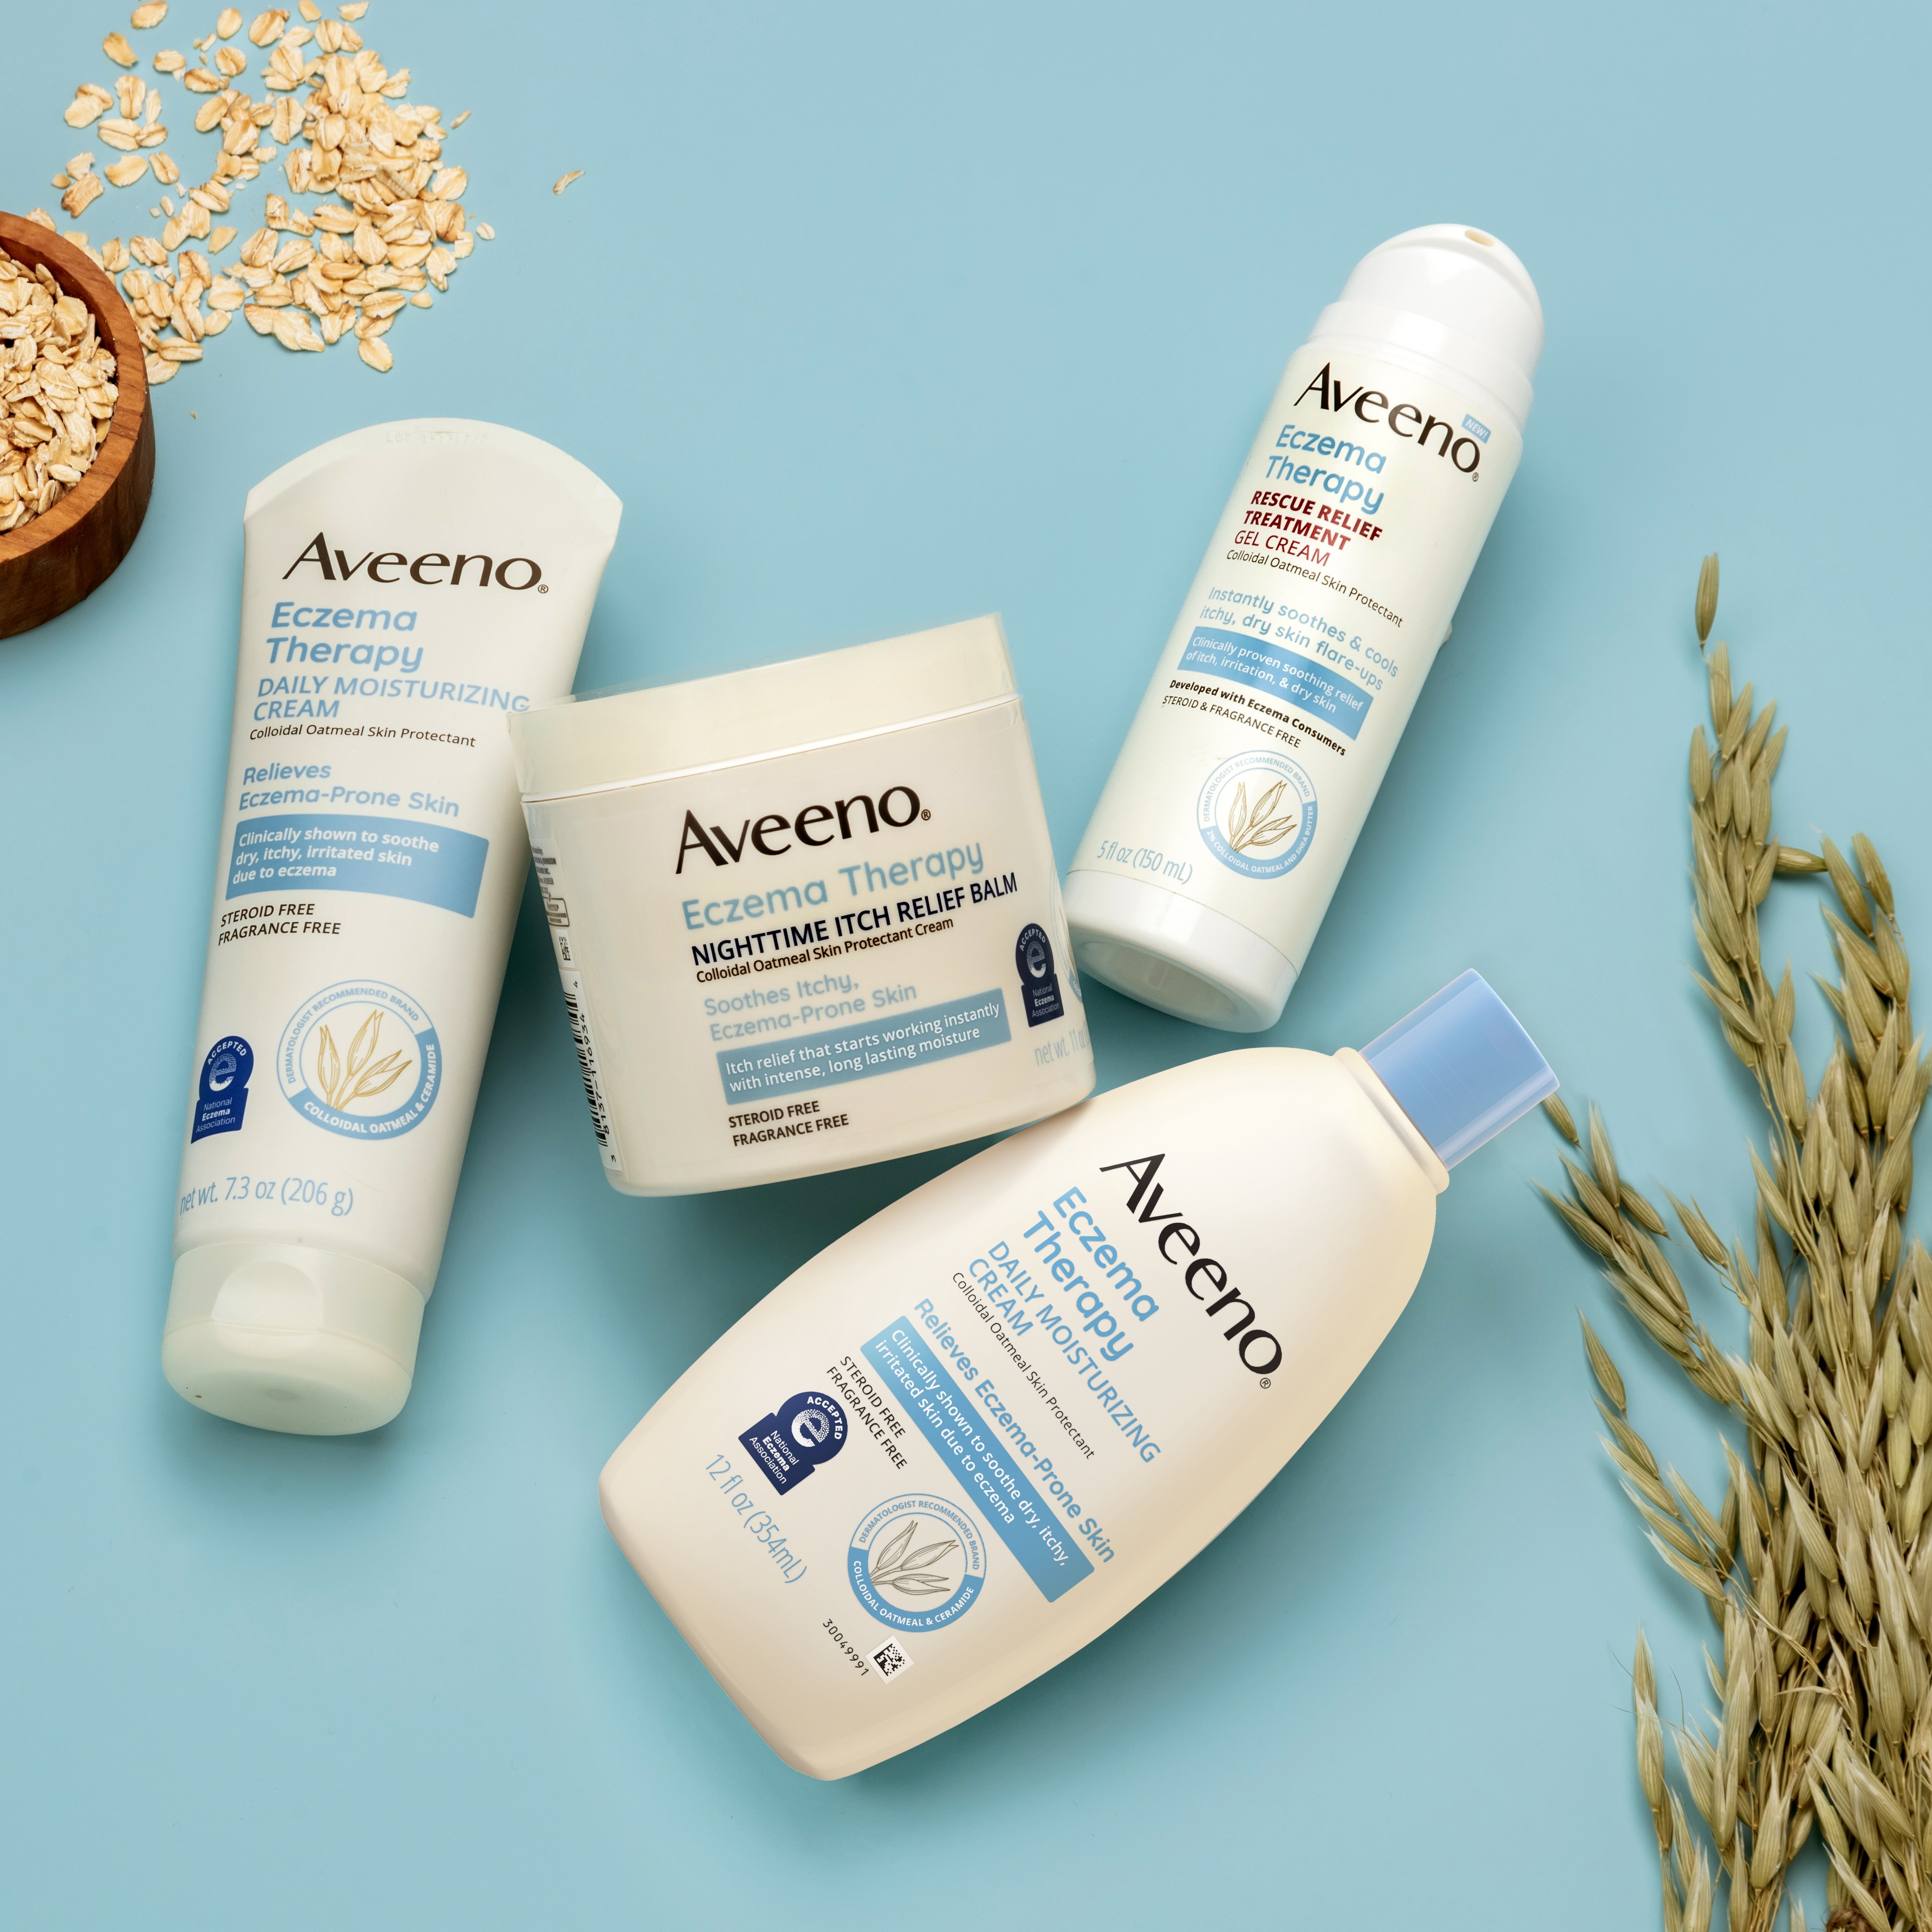 Aveeno Eczema Therapy Product Line